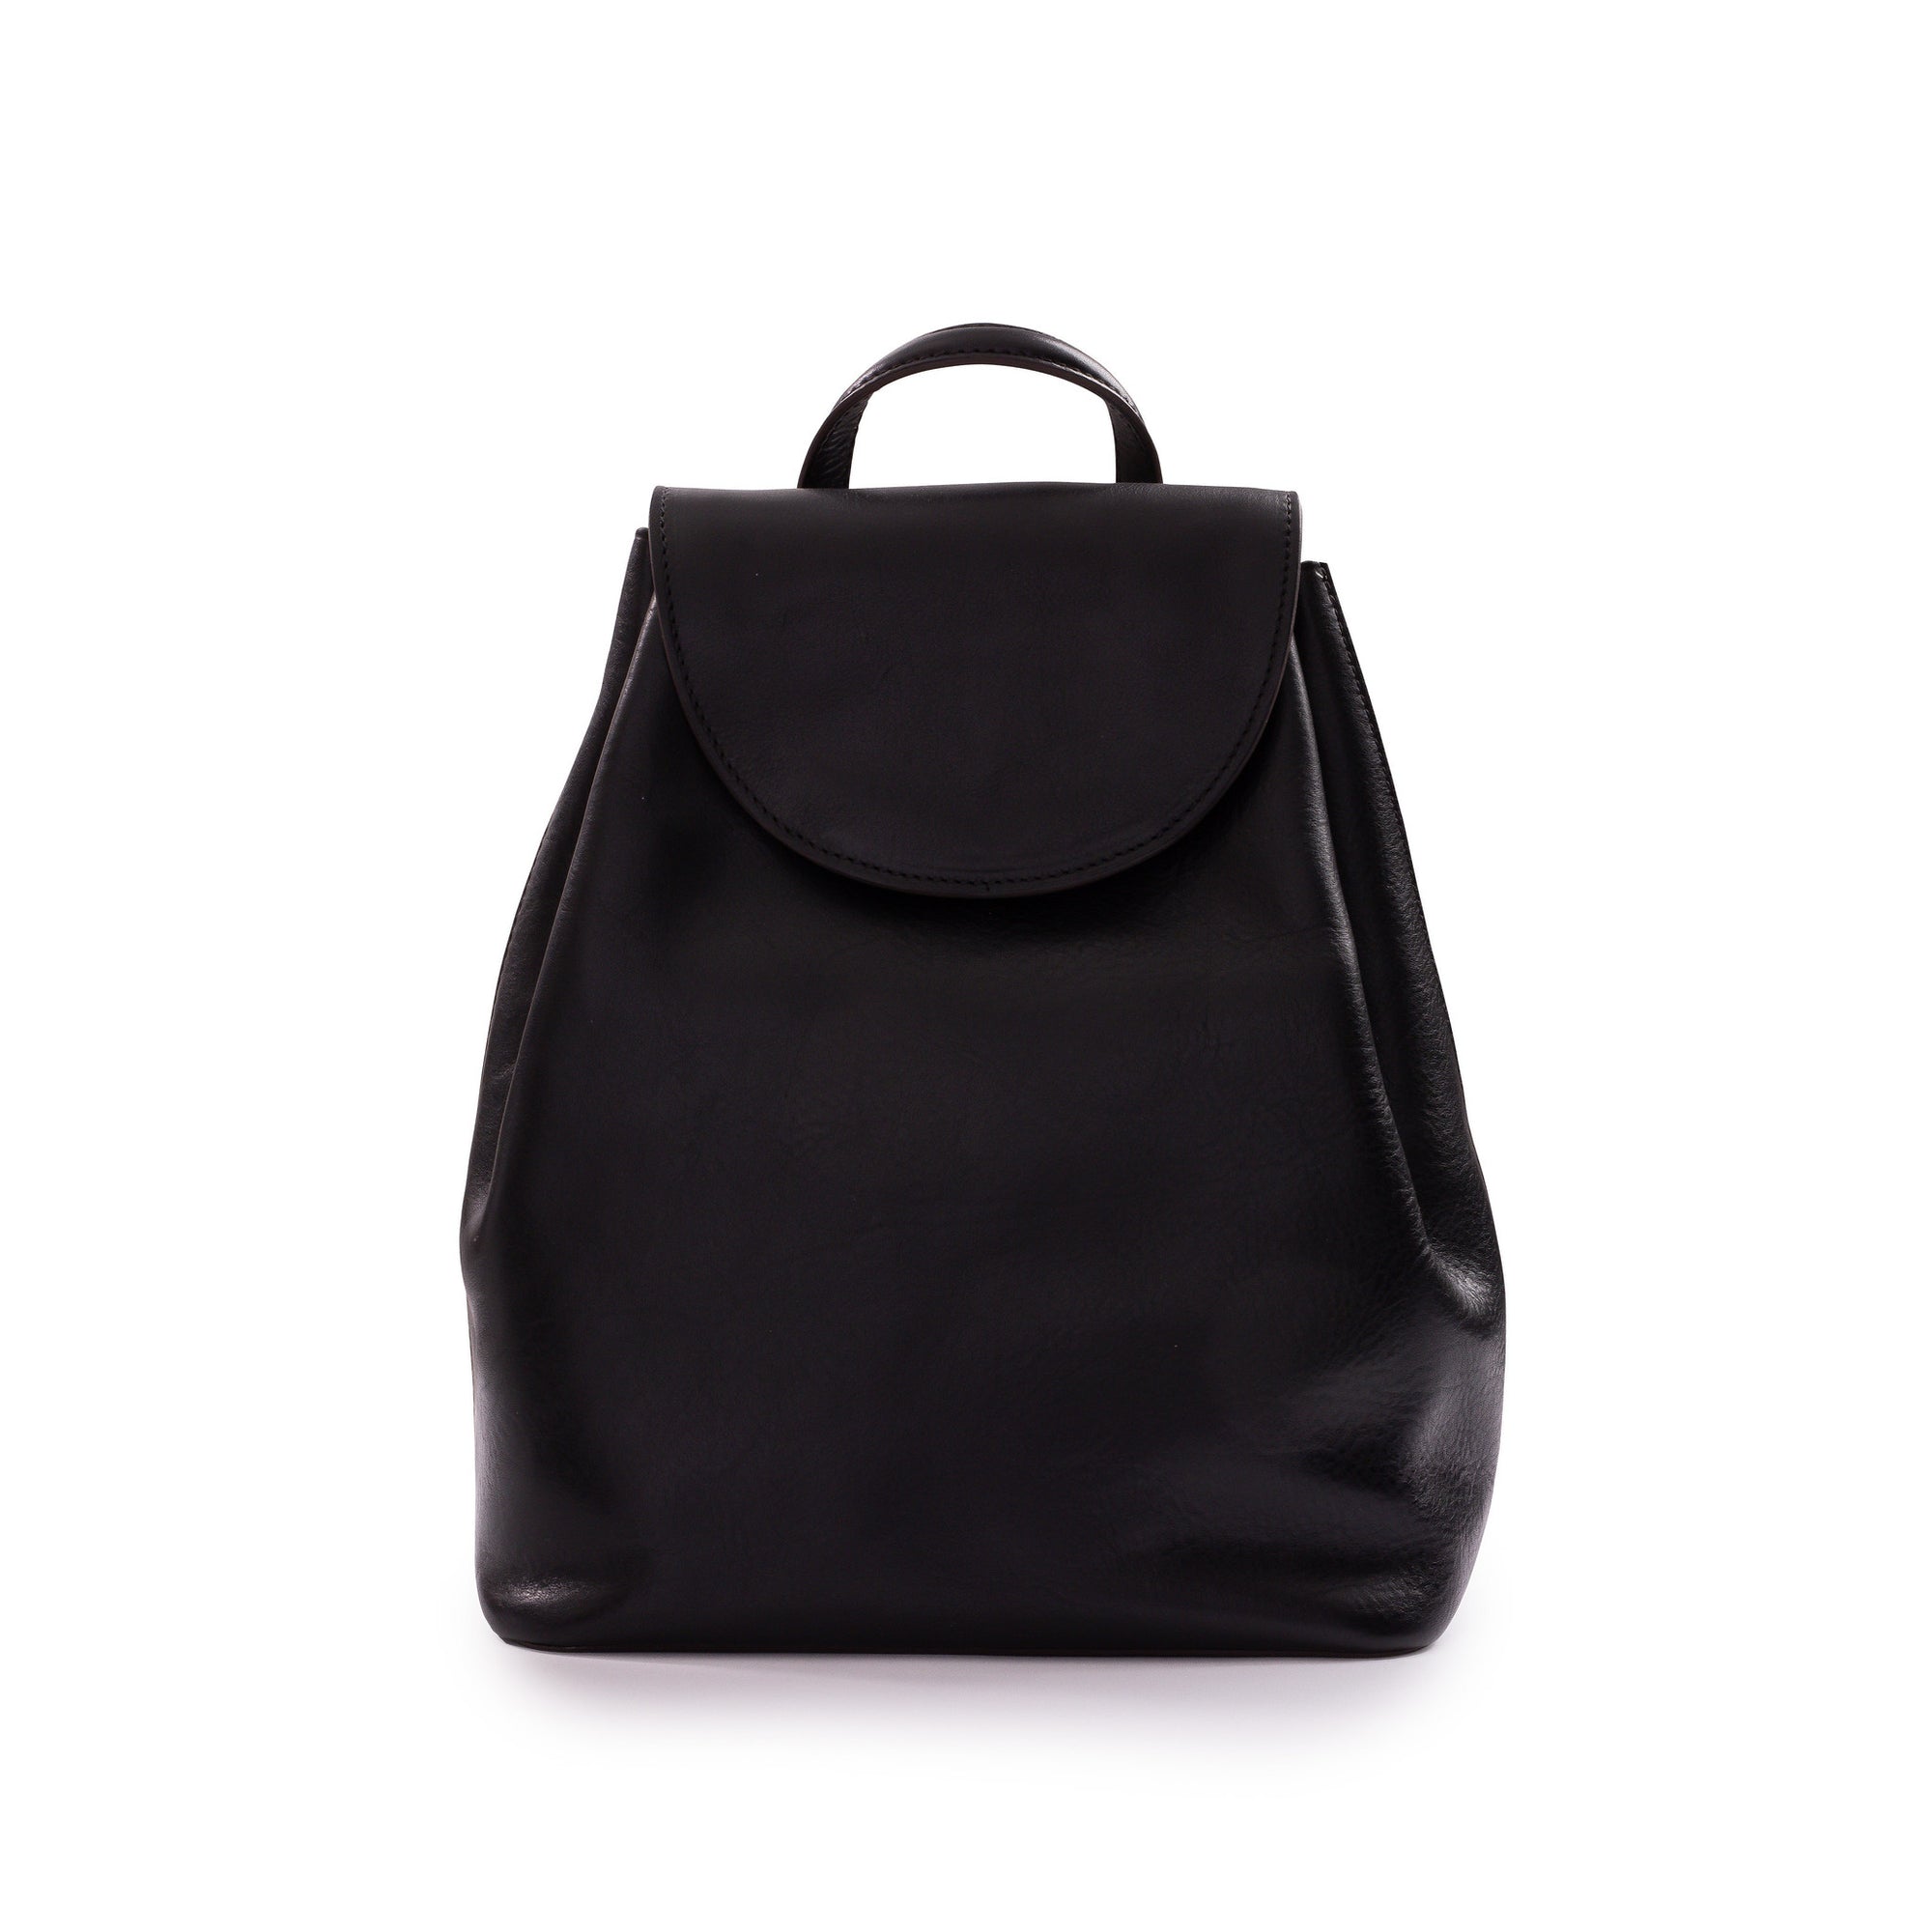 Belle Leather Backpack in Black